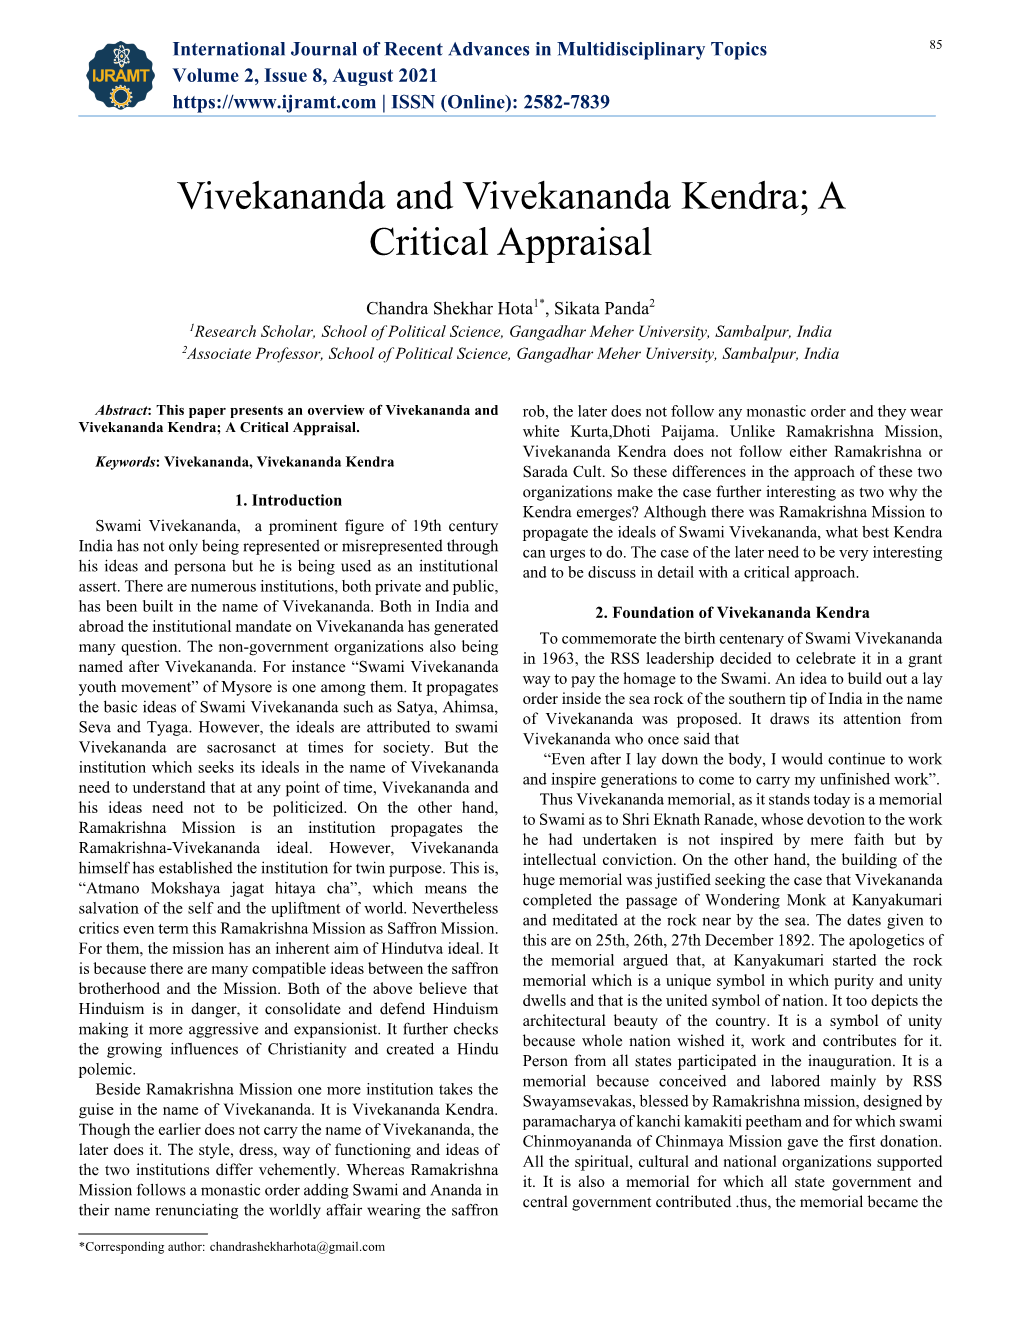 Vivekananda and Vivekananda Kendra; a Critical Appraisal